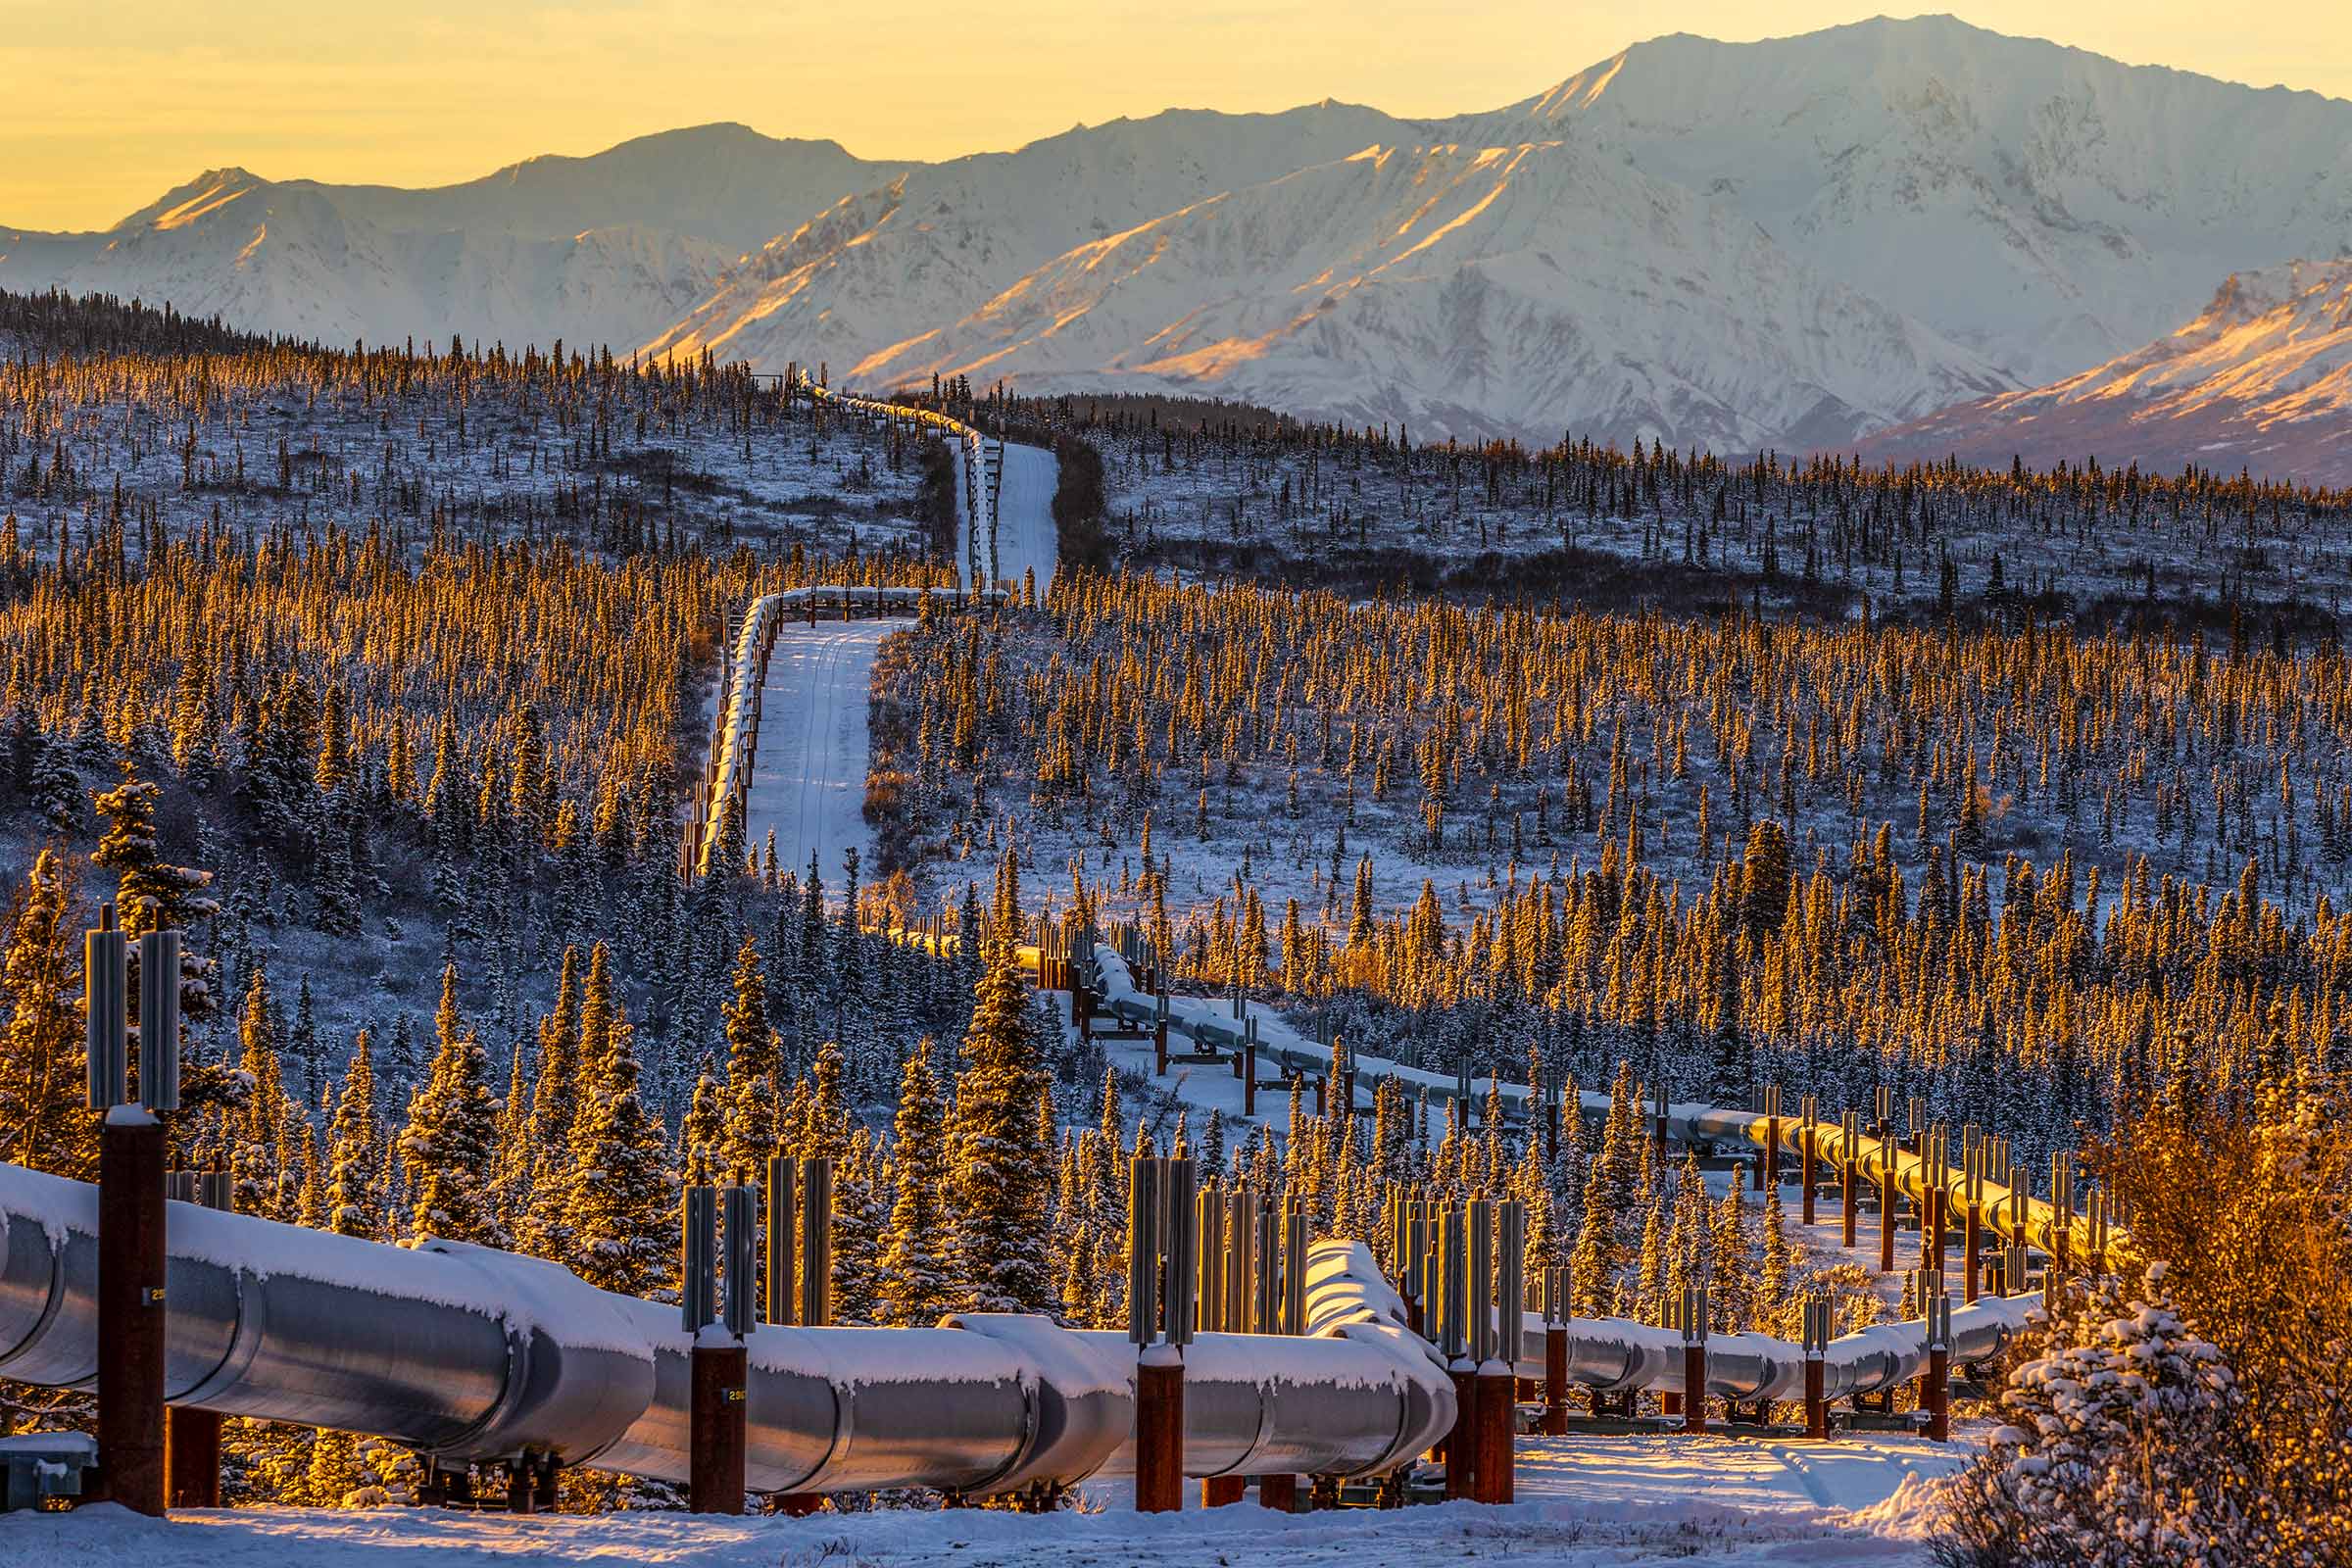 Trans-Alaska Pipeline System (TAPS)